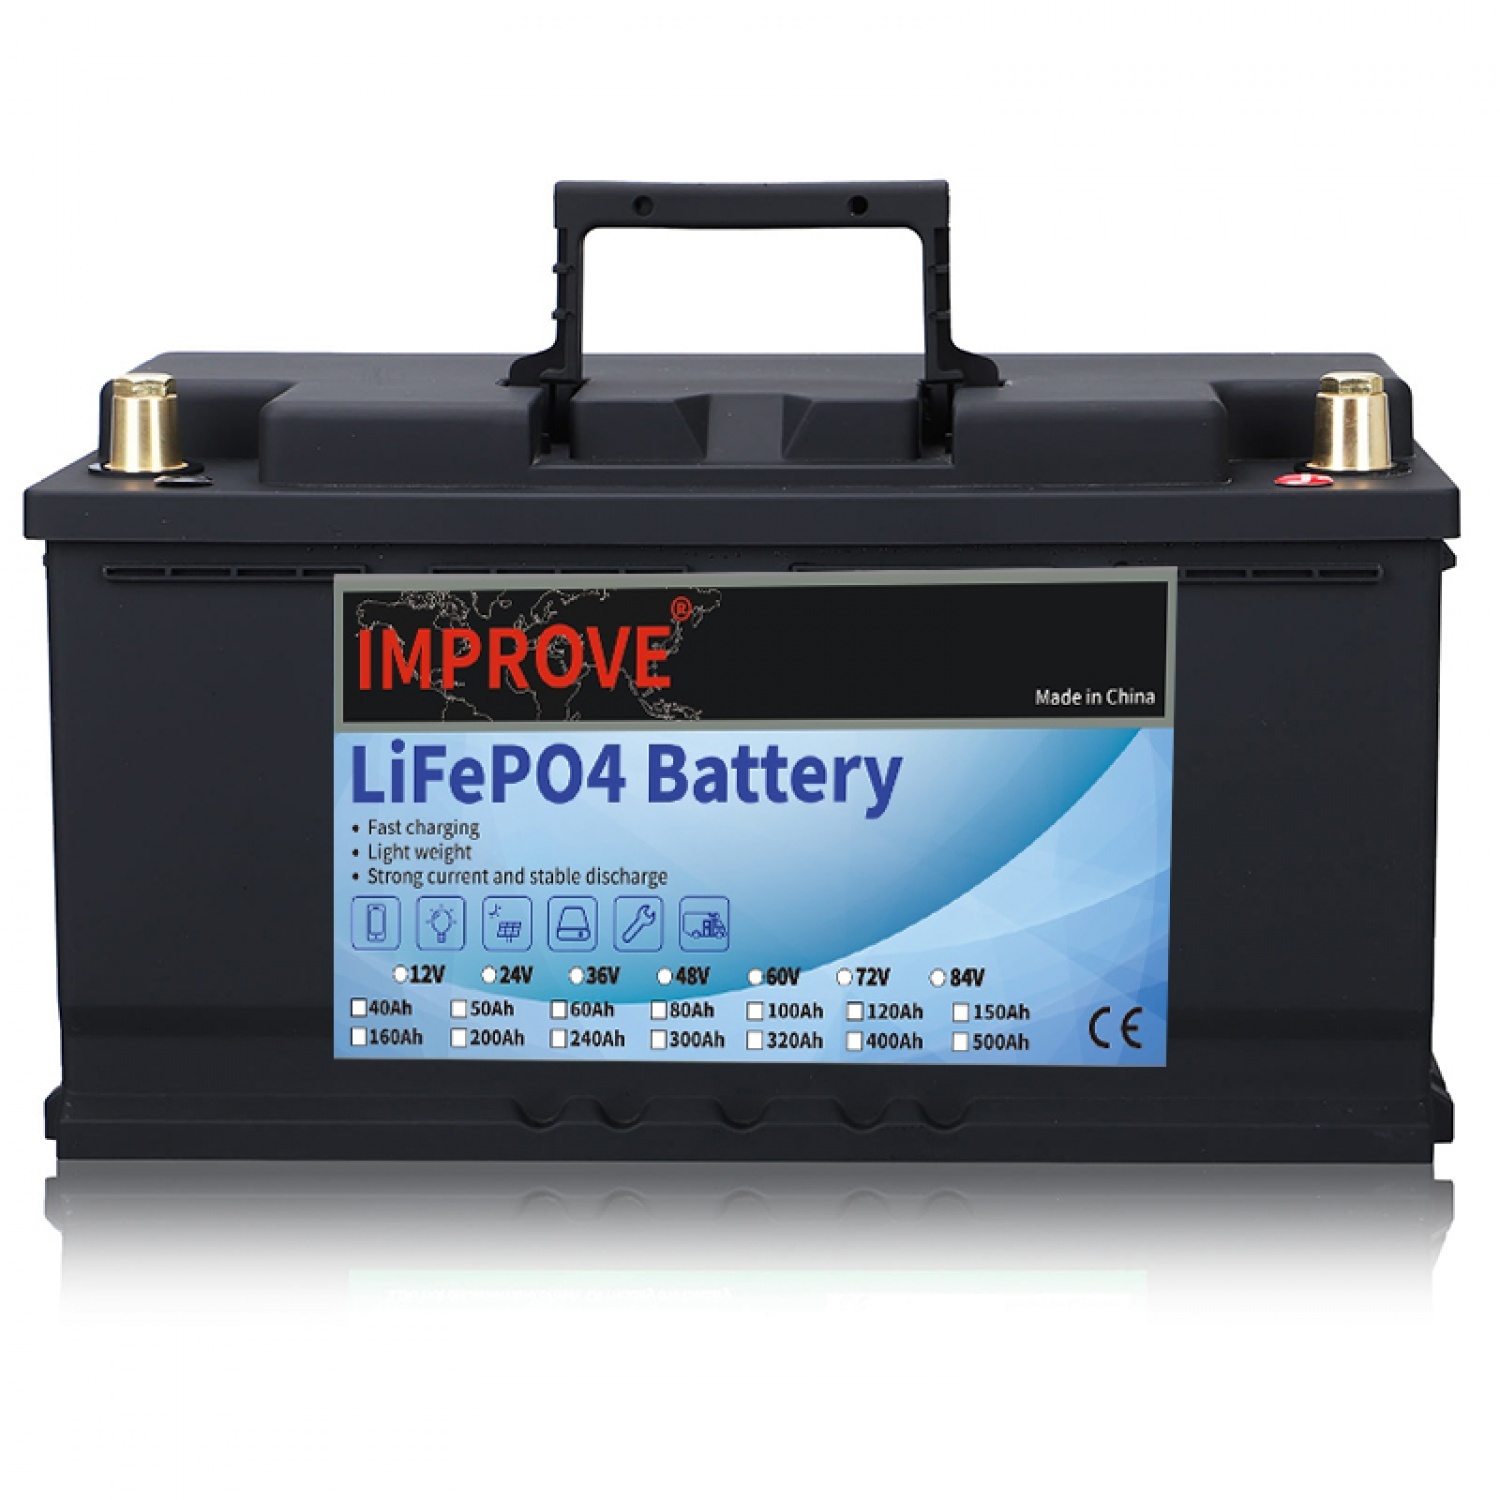 Advantages of LiFePO4 Battery